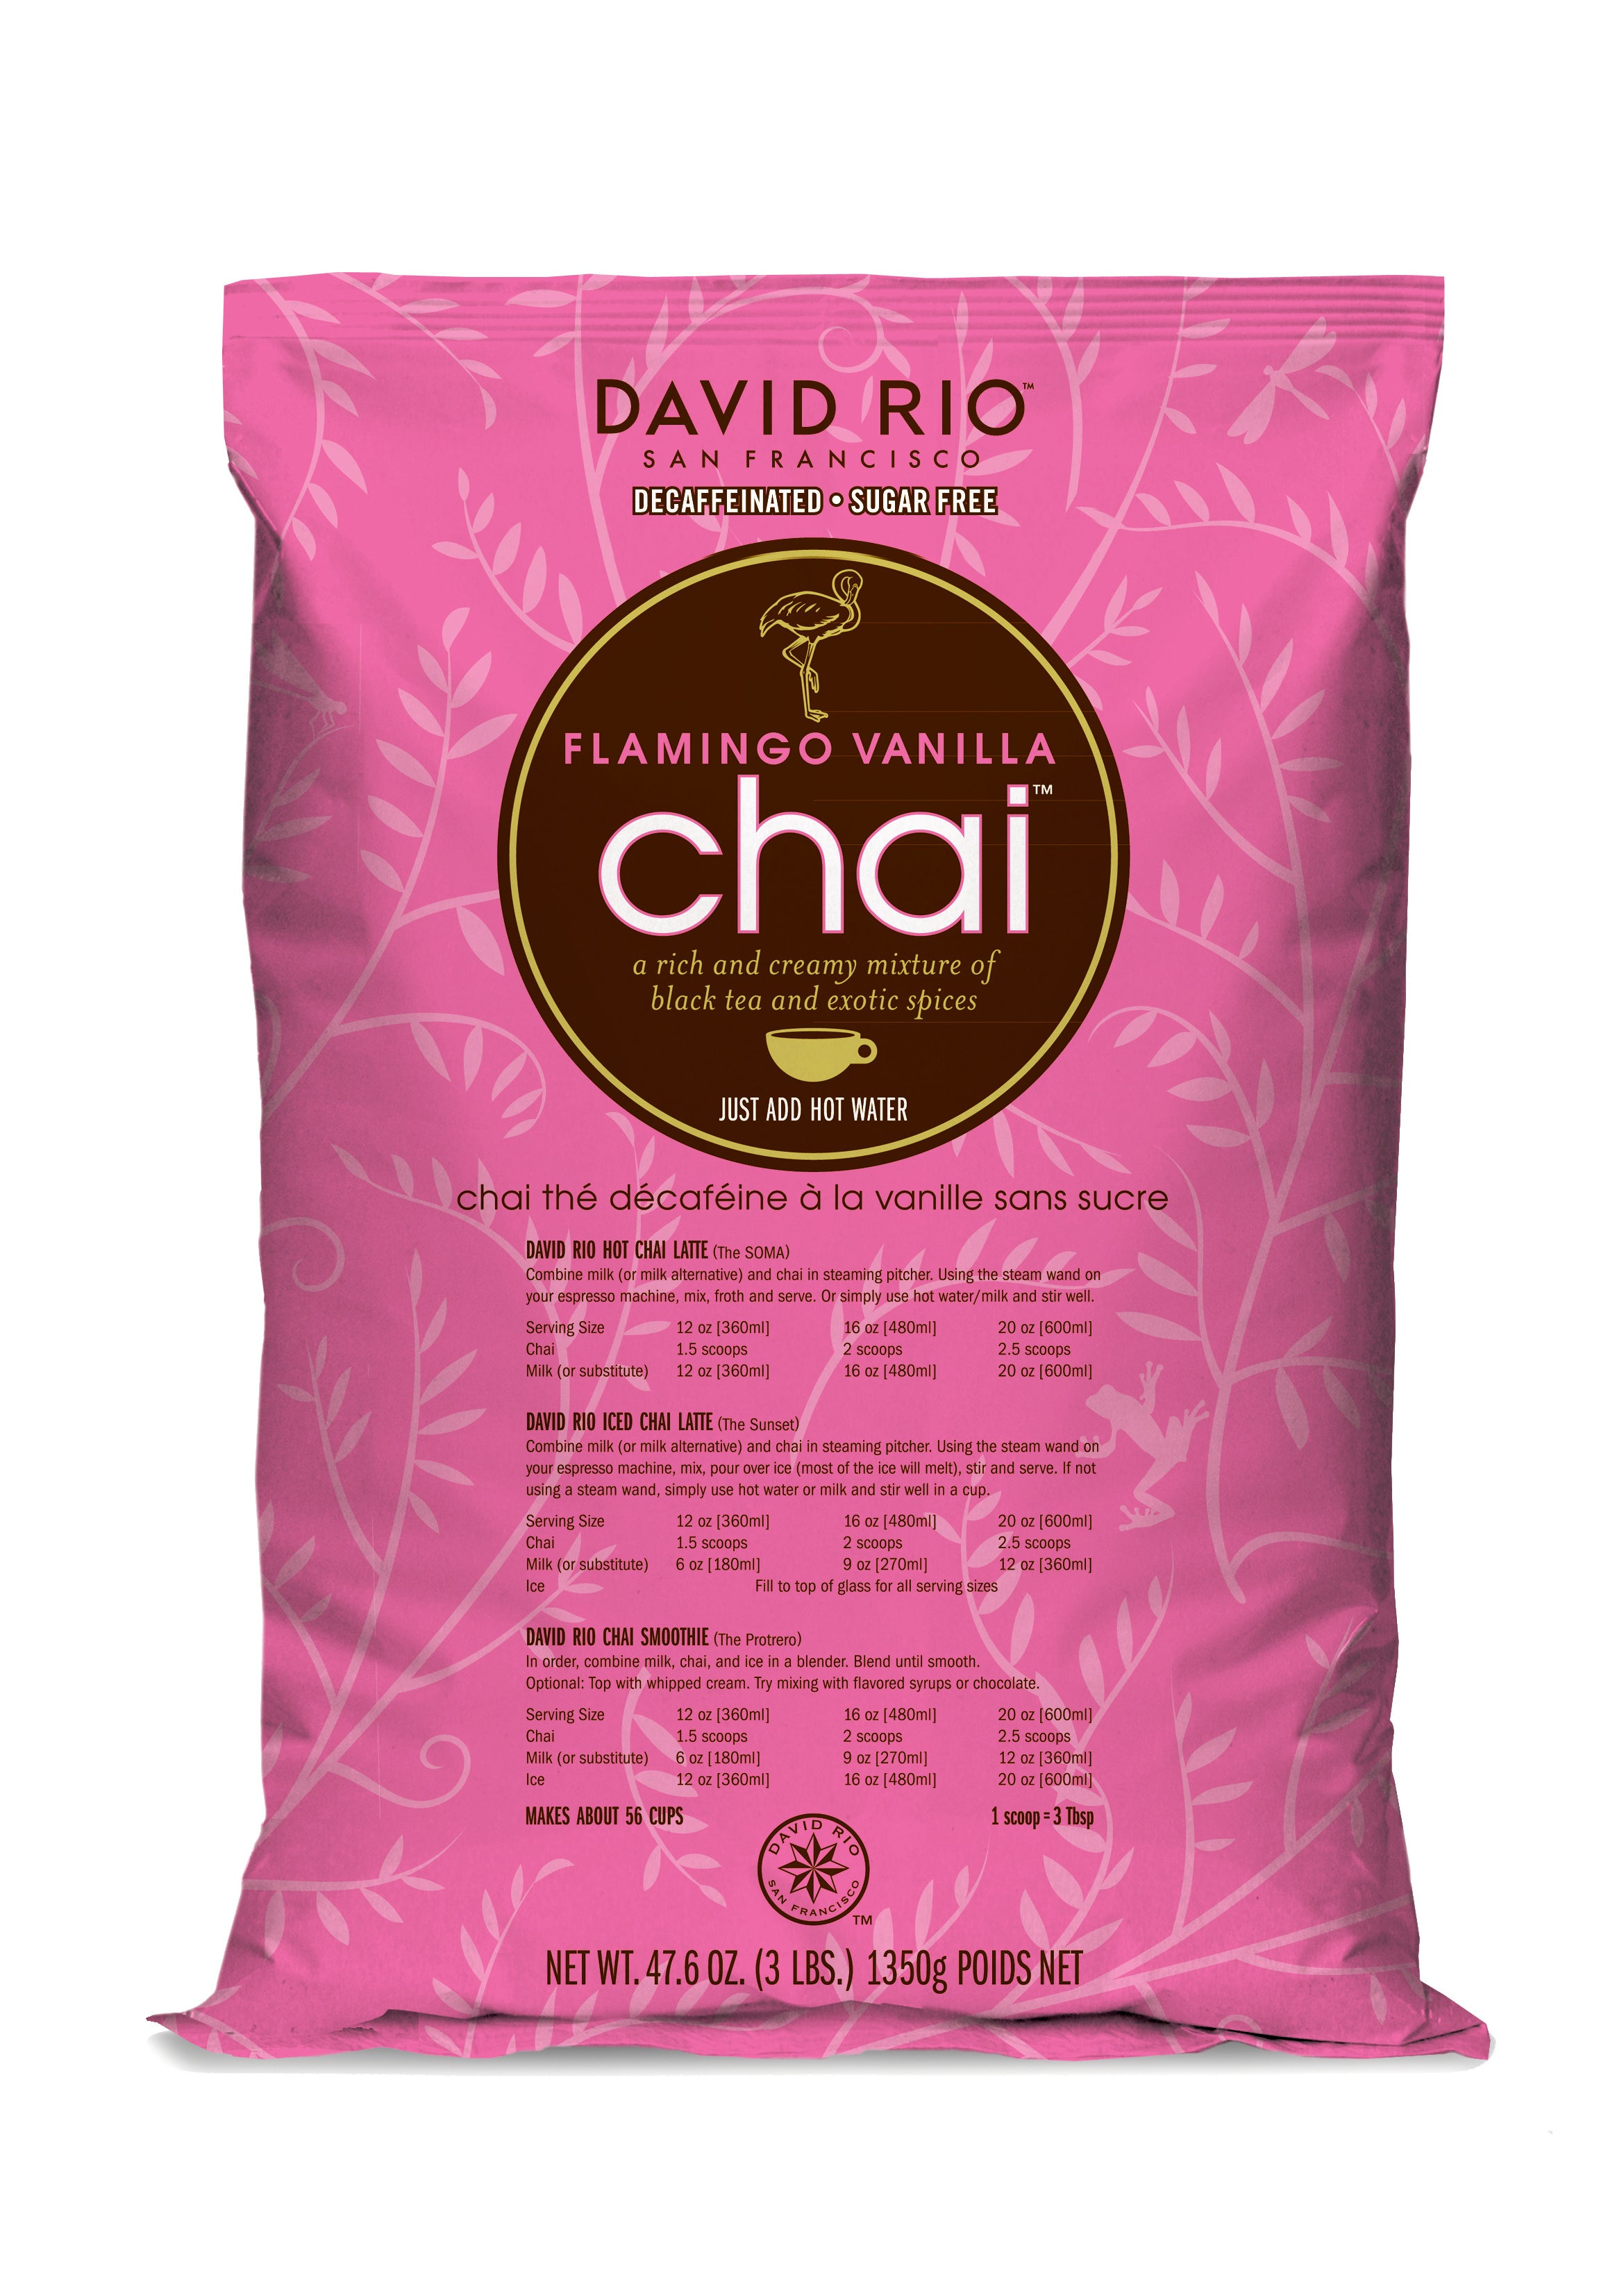 David Rio Chai Mix, Decaf Sugar Free, Flamingo Vanilla, 3 Pound